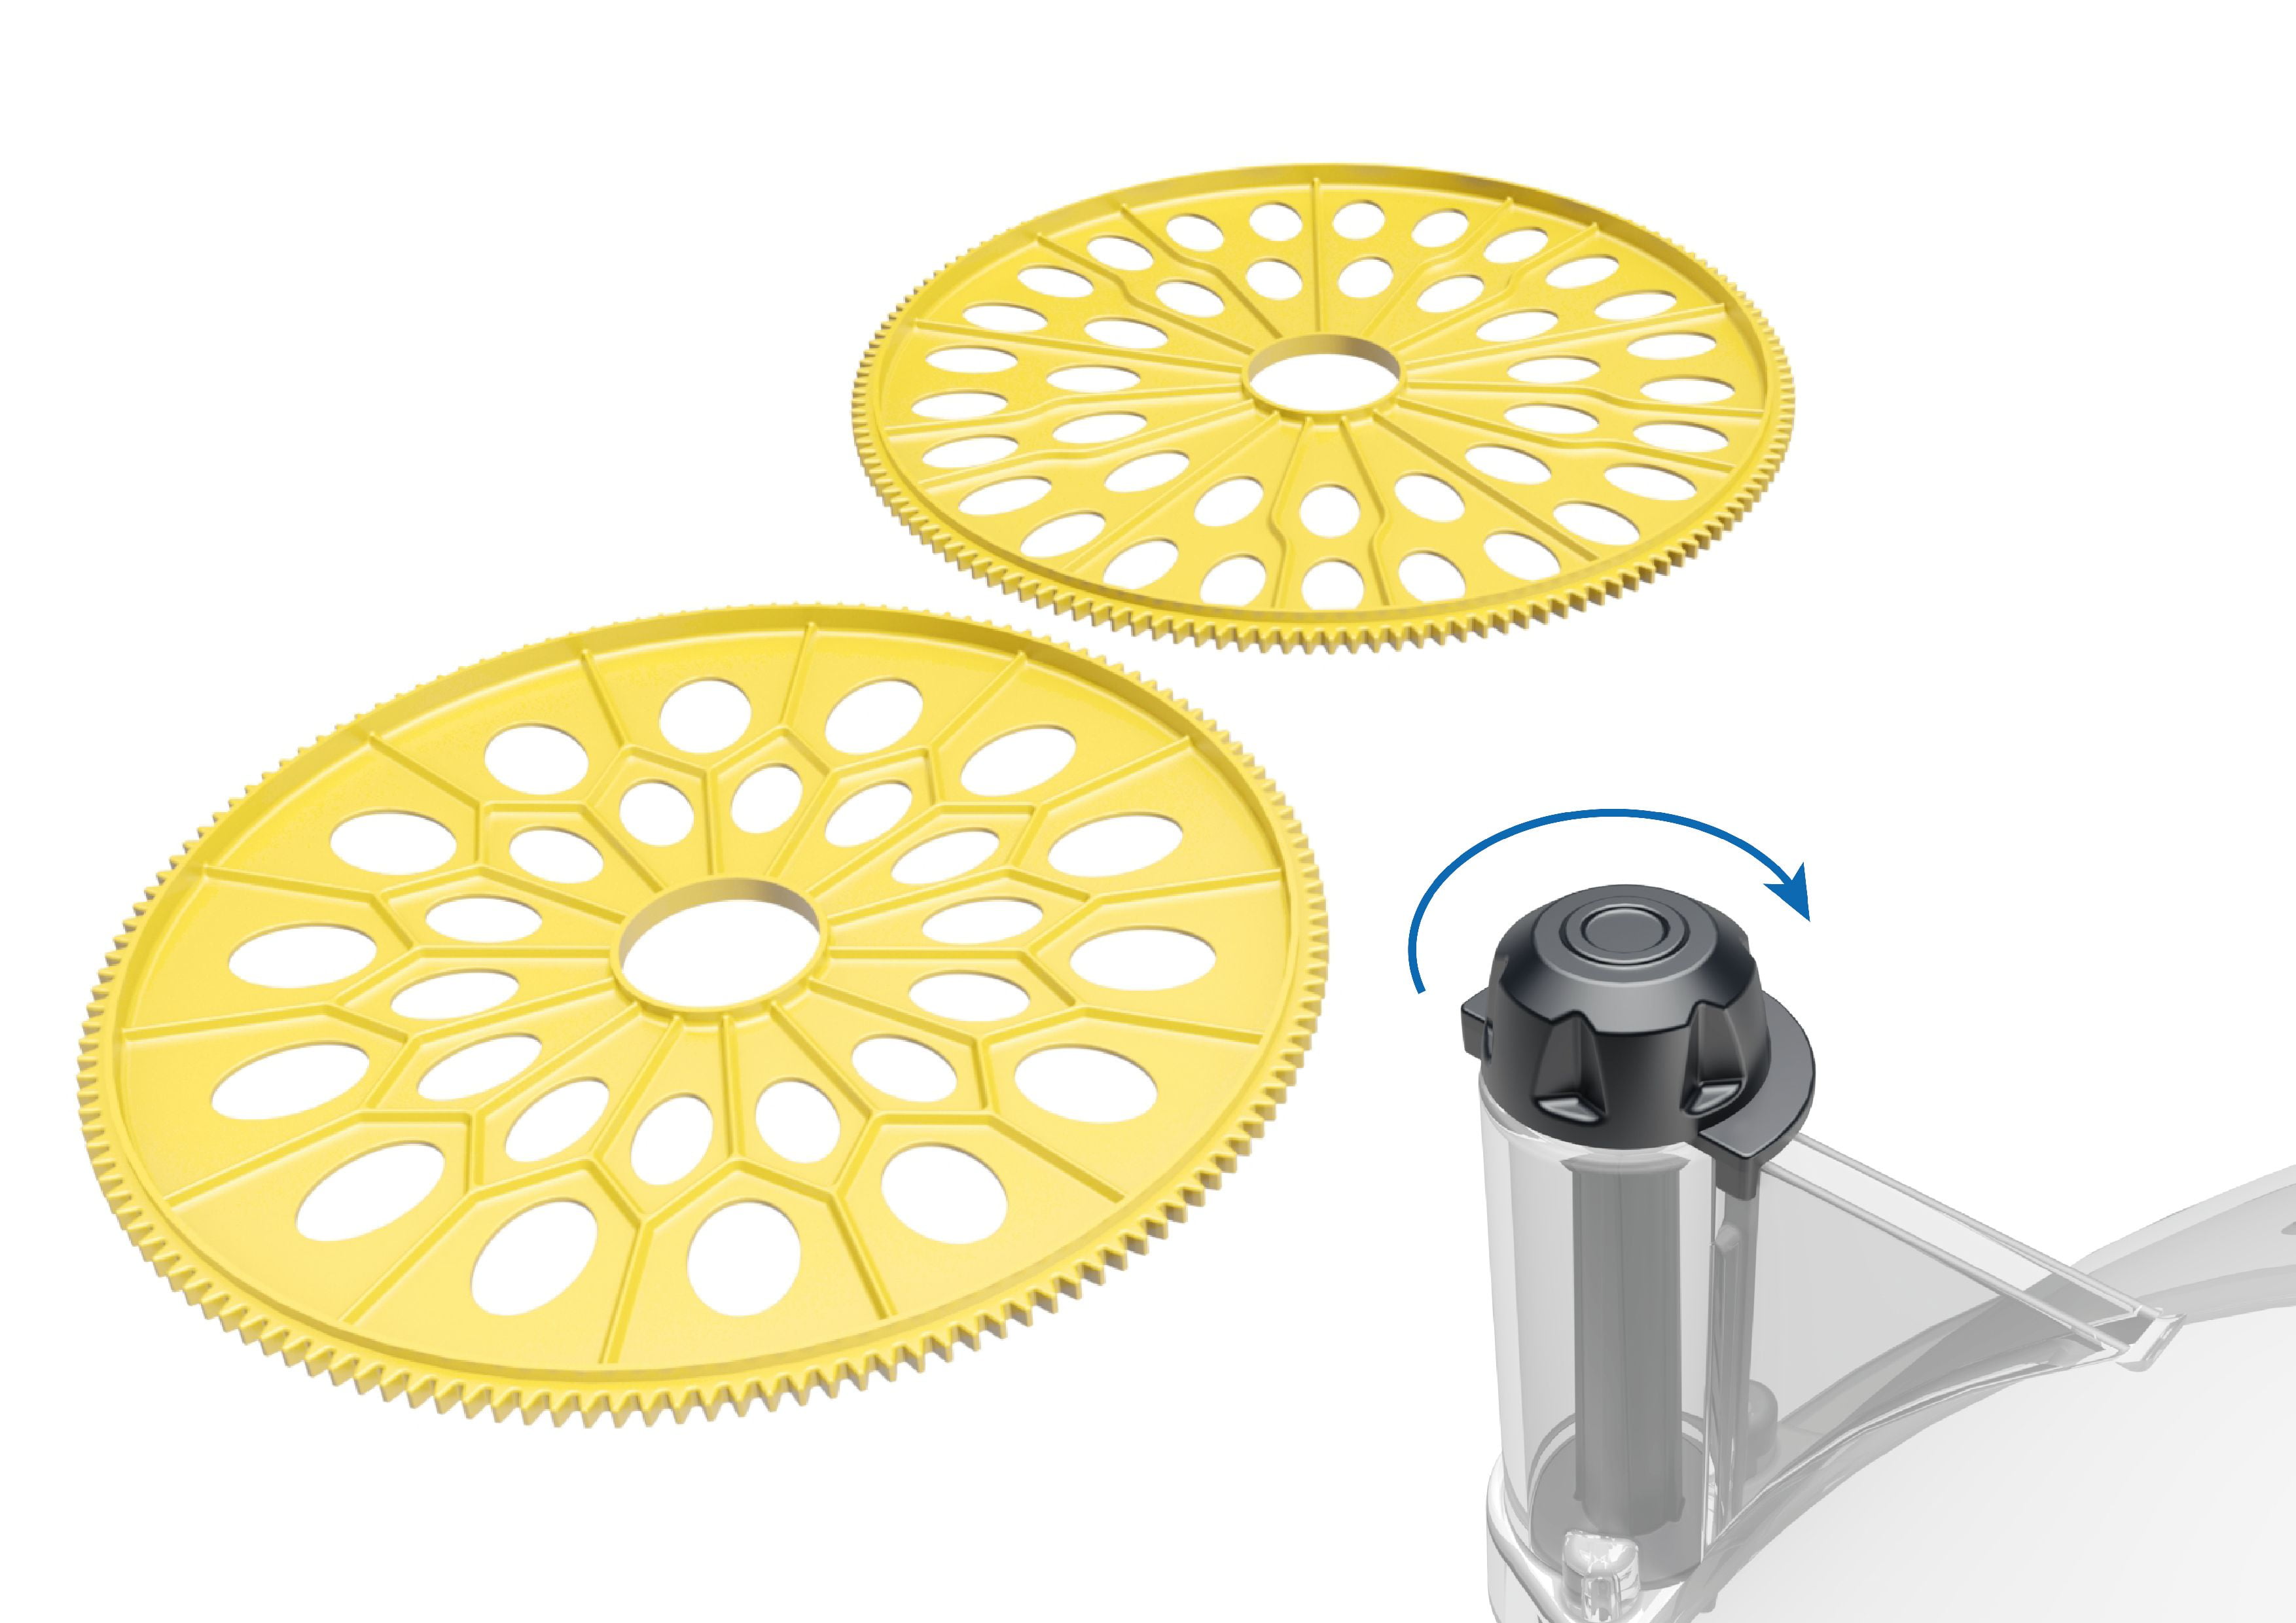 Brinsea Products Usac010 Semi-automatic Turning Kit For Maxi Eco Egg Incubators